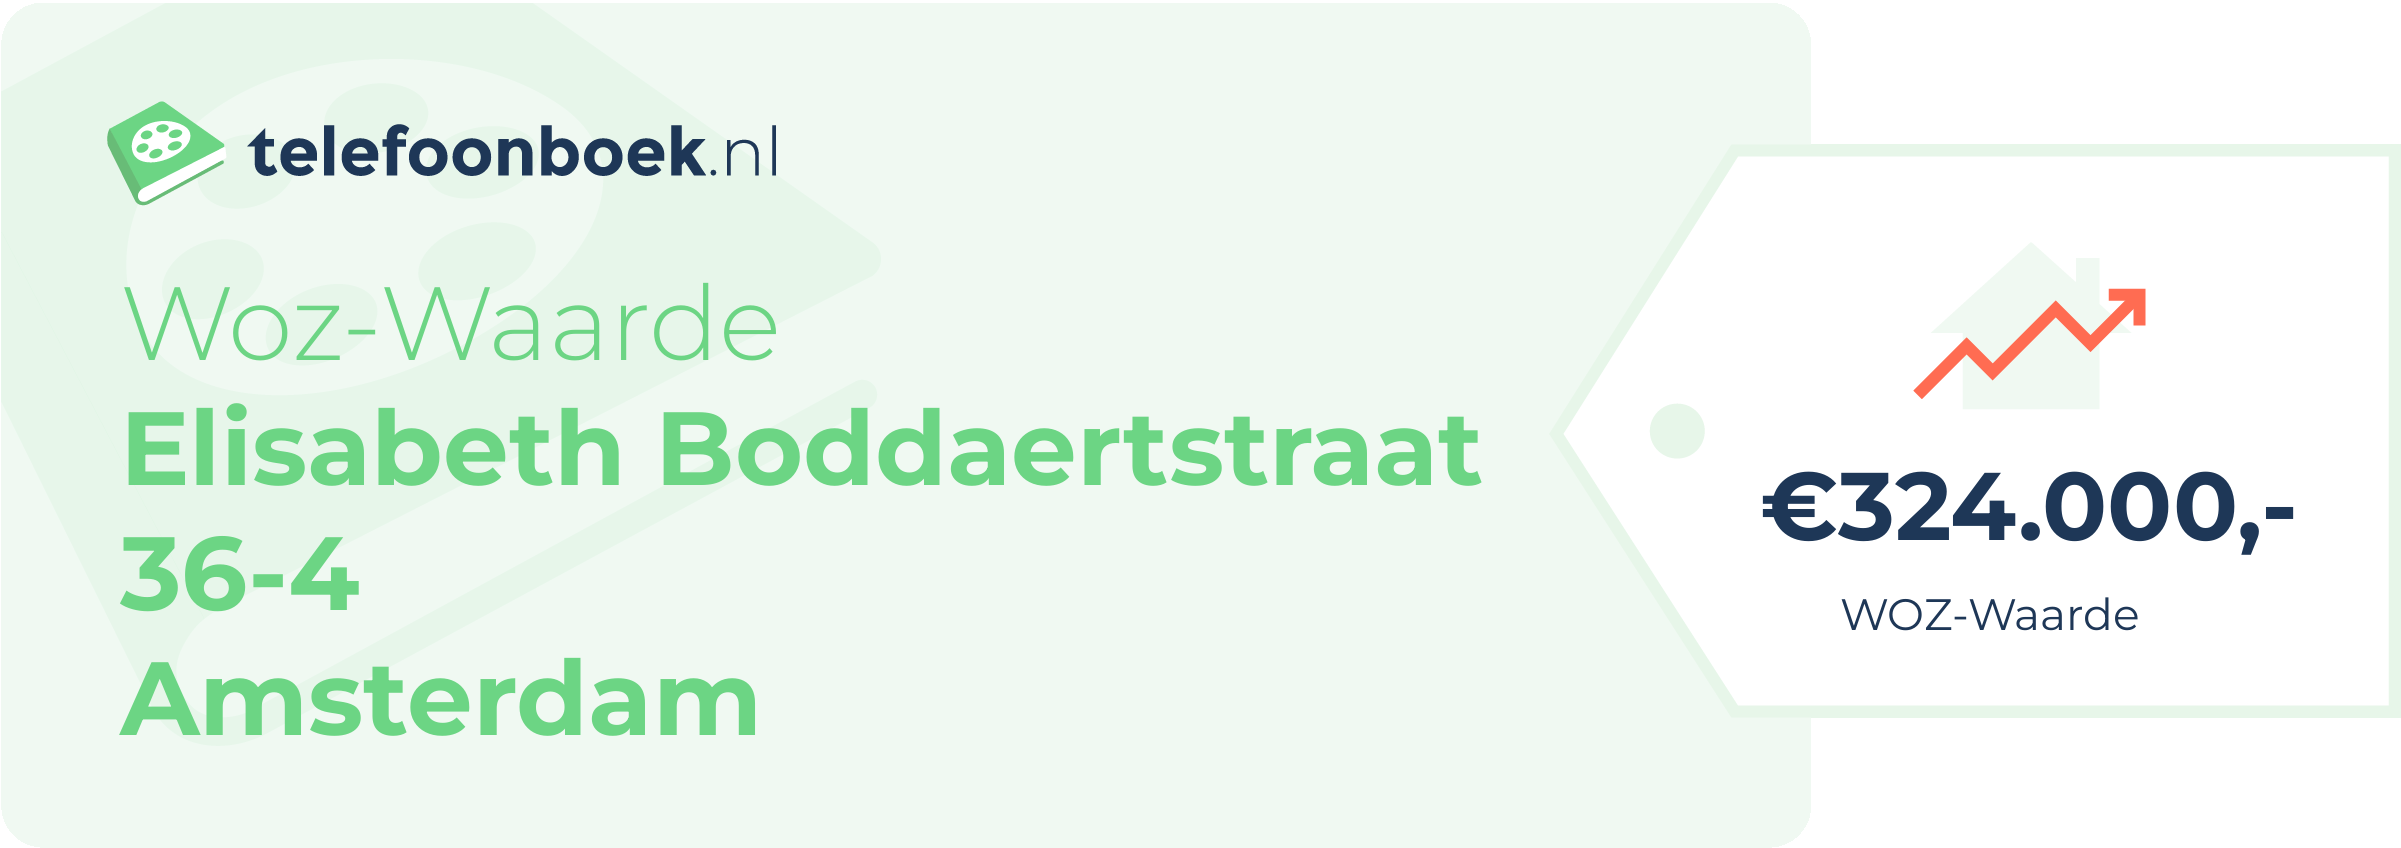 WOZ-waarde Elisabeth Boddaertstraat 36-4 Amsterdam